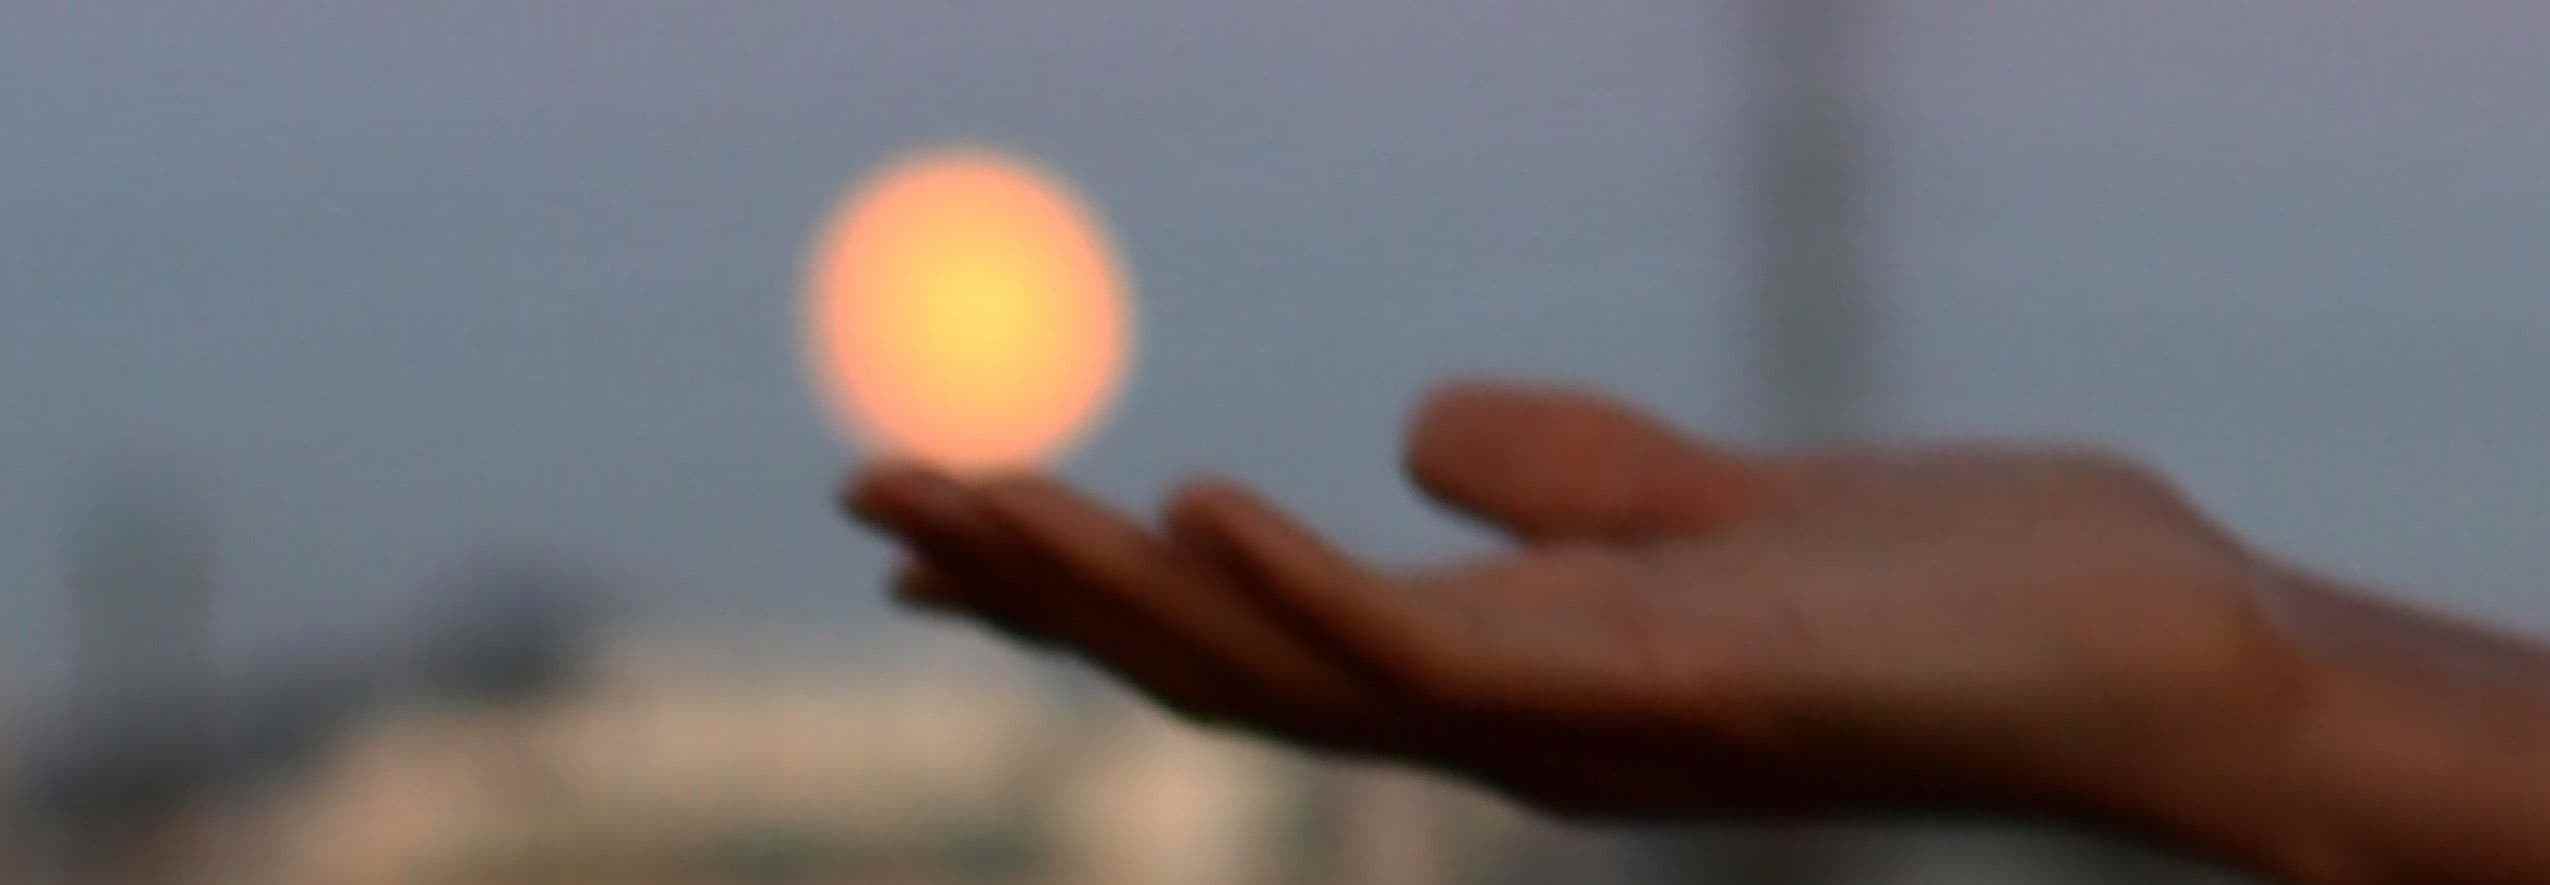 Hand holding sunset